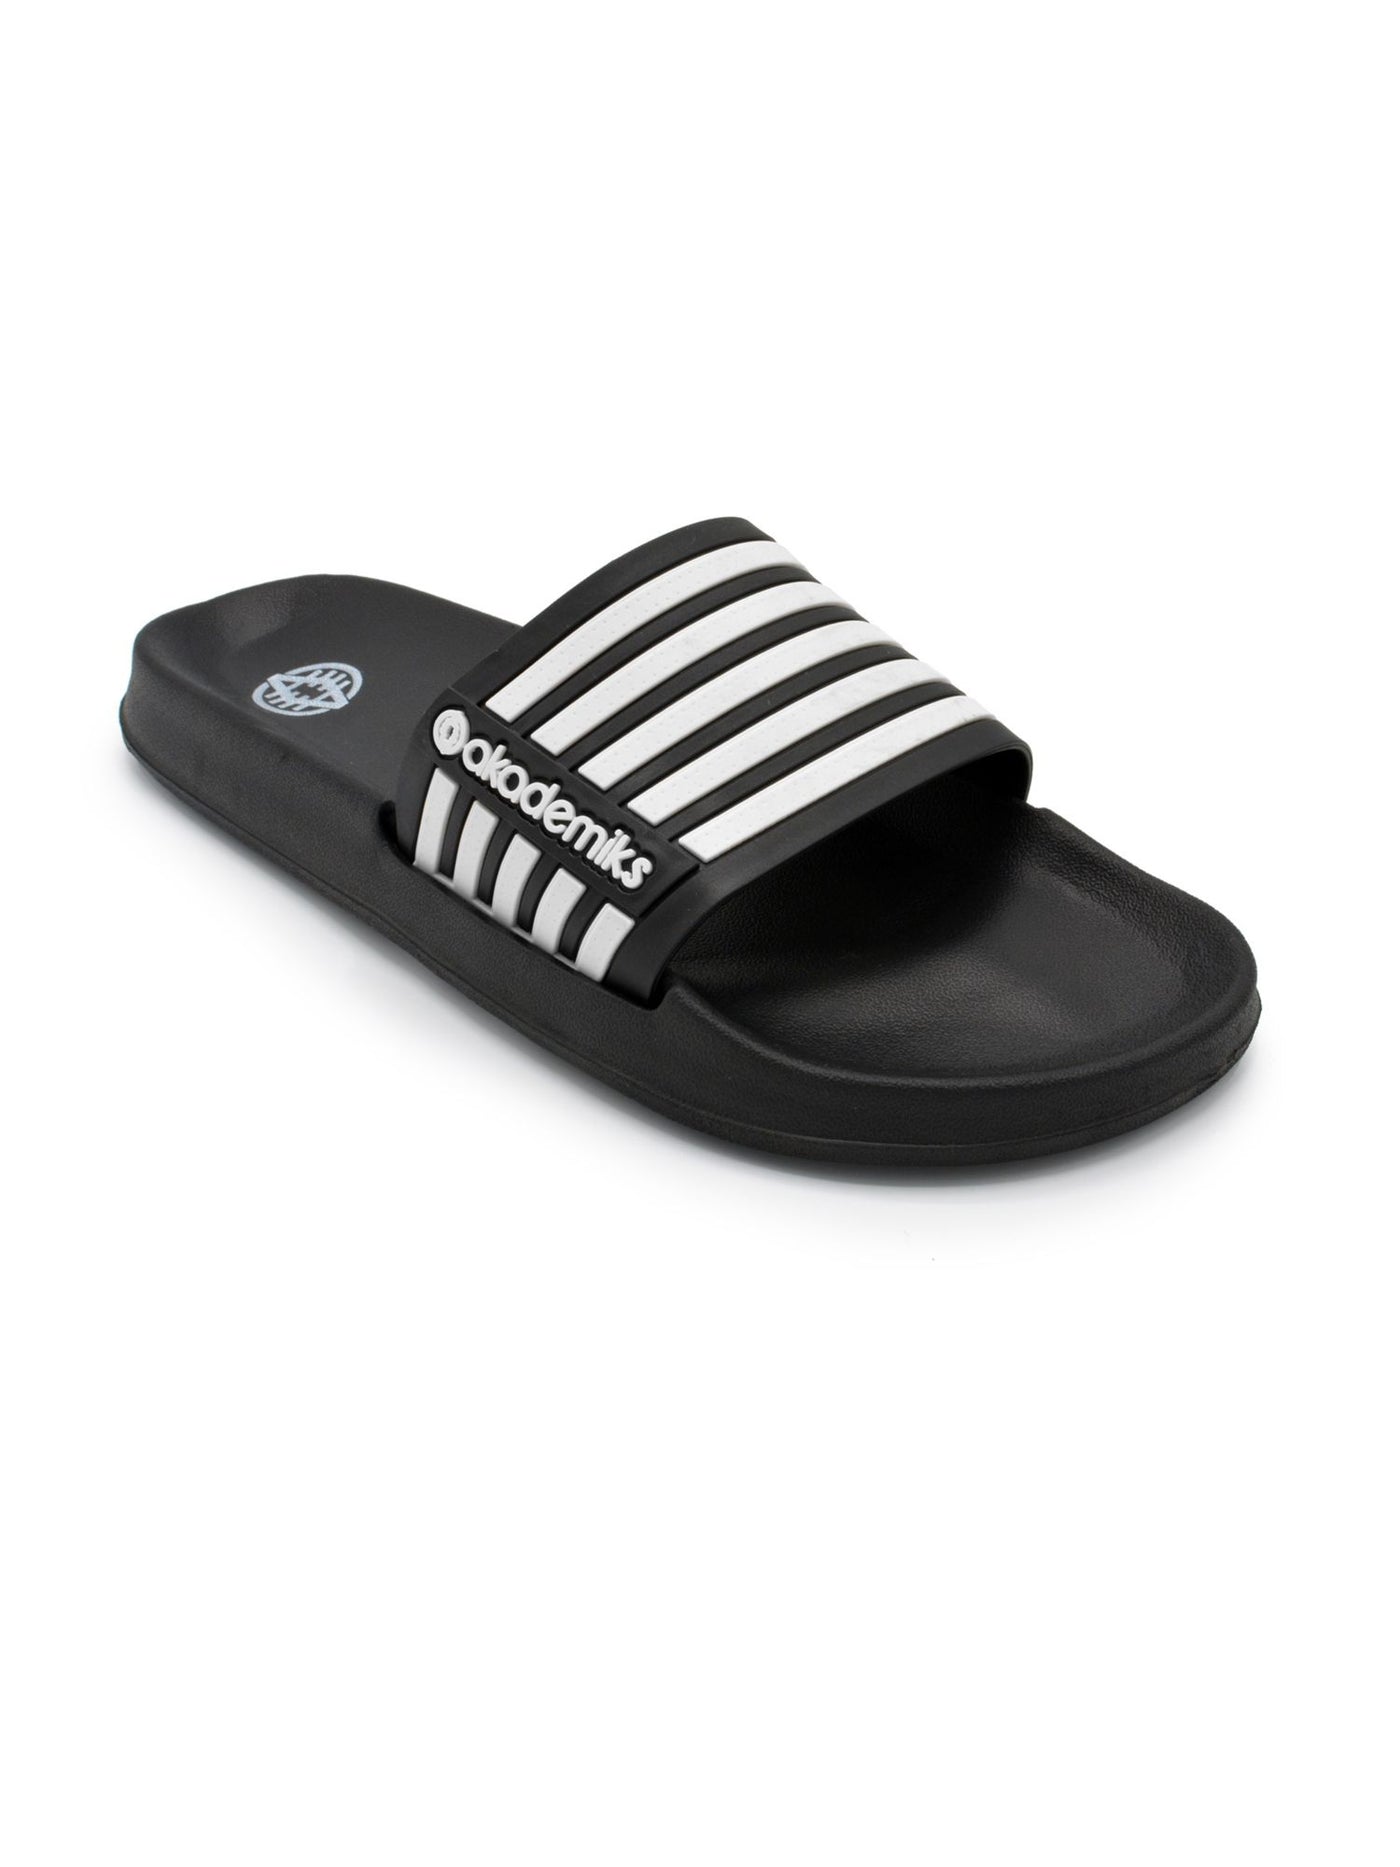 AKADEMIKS Mens Black Striped Comfort Akademiks Round Toe Slip On Slide Sandals Shoes 44